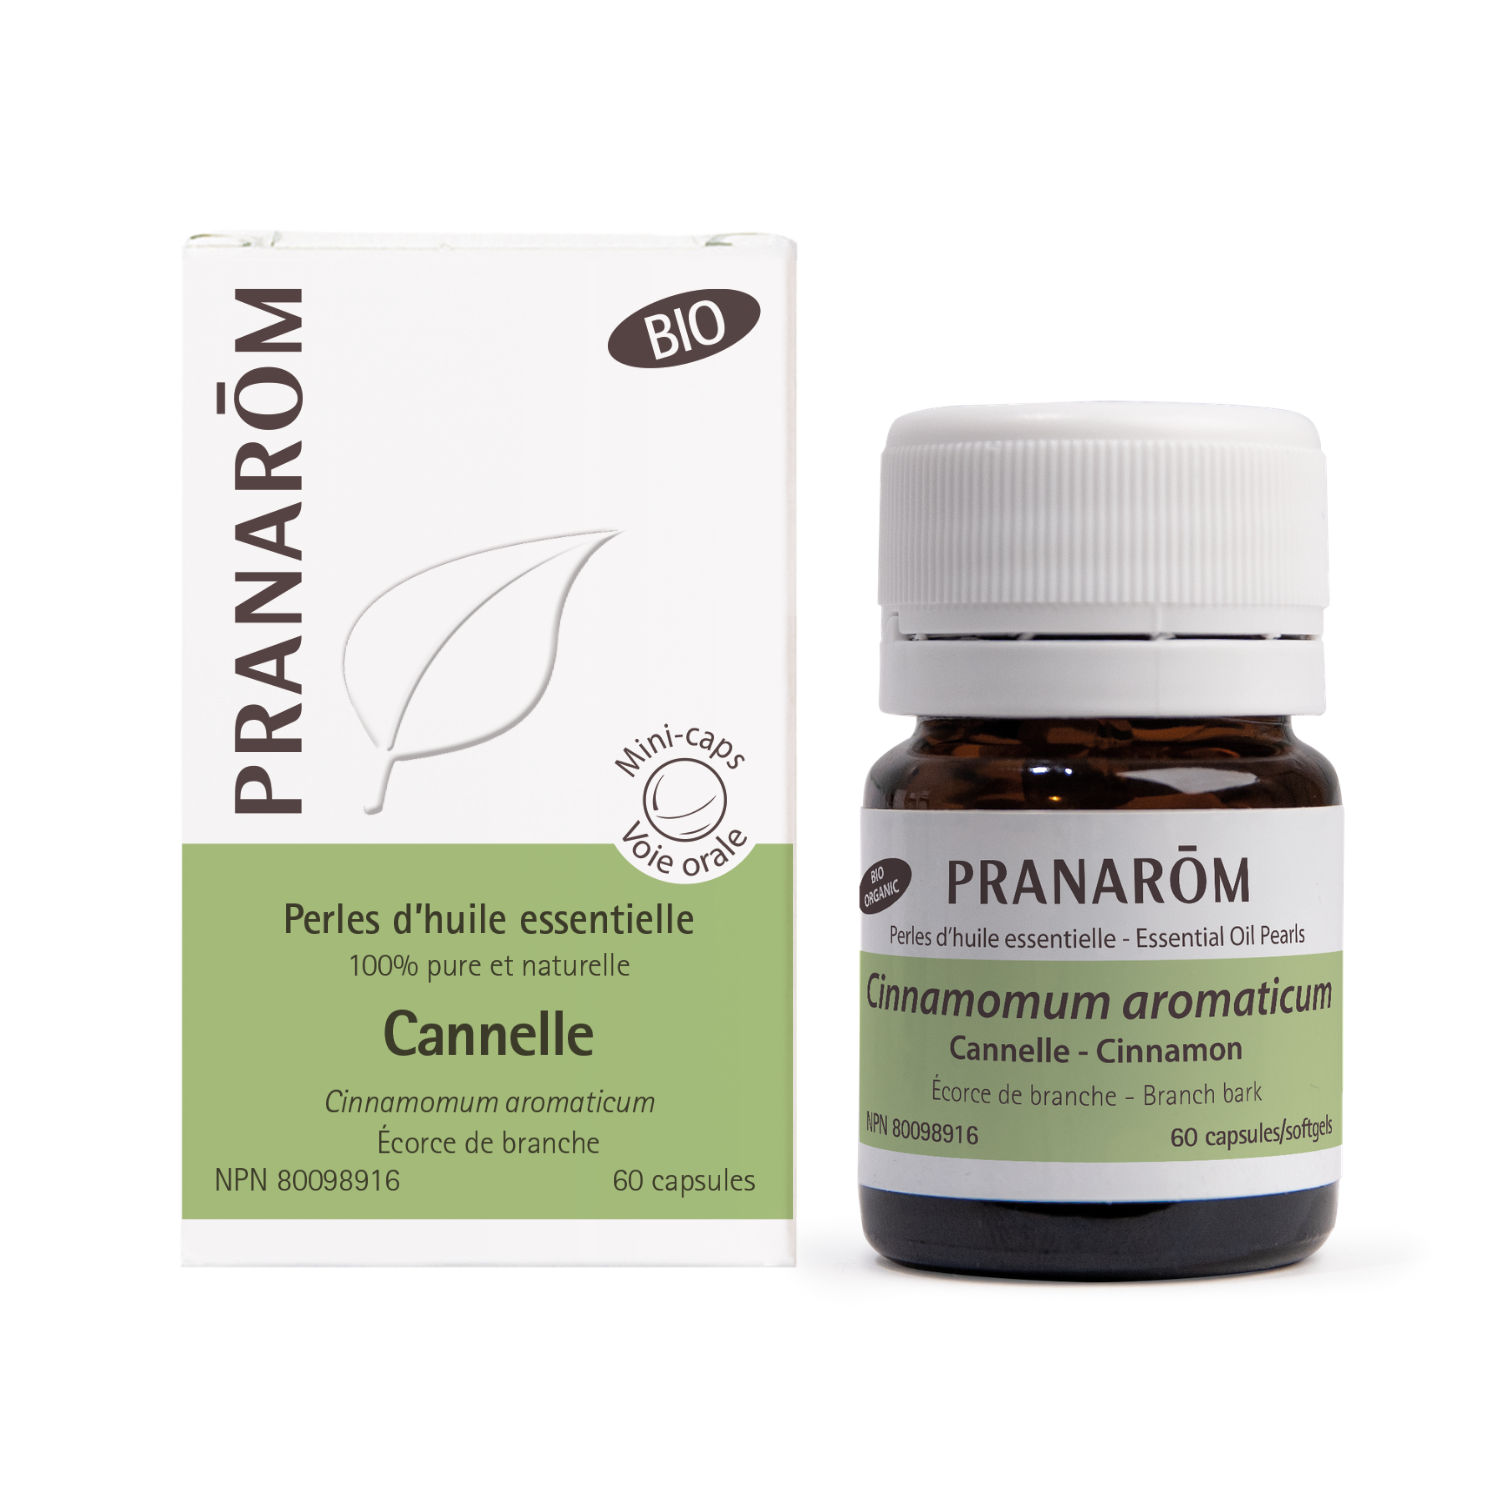 Cannelle perles d'huile essentielle - Pranarom